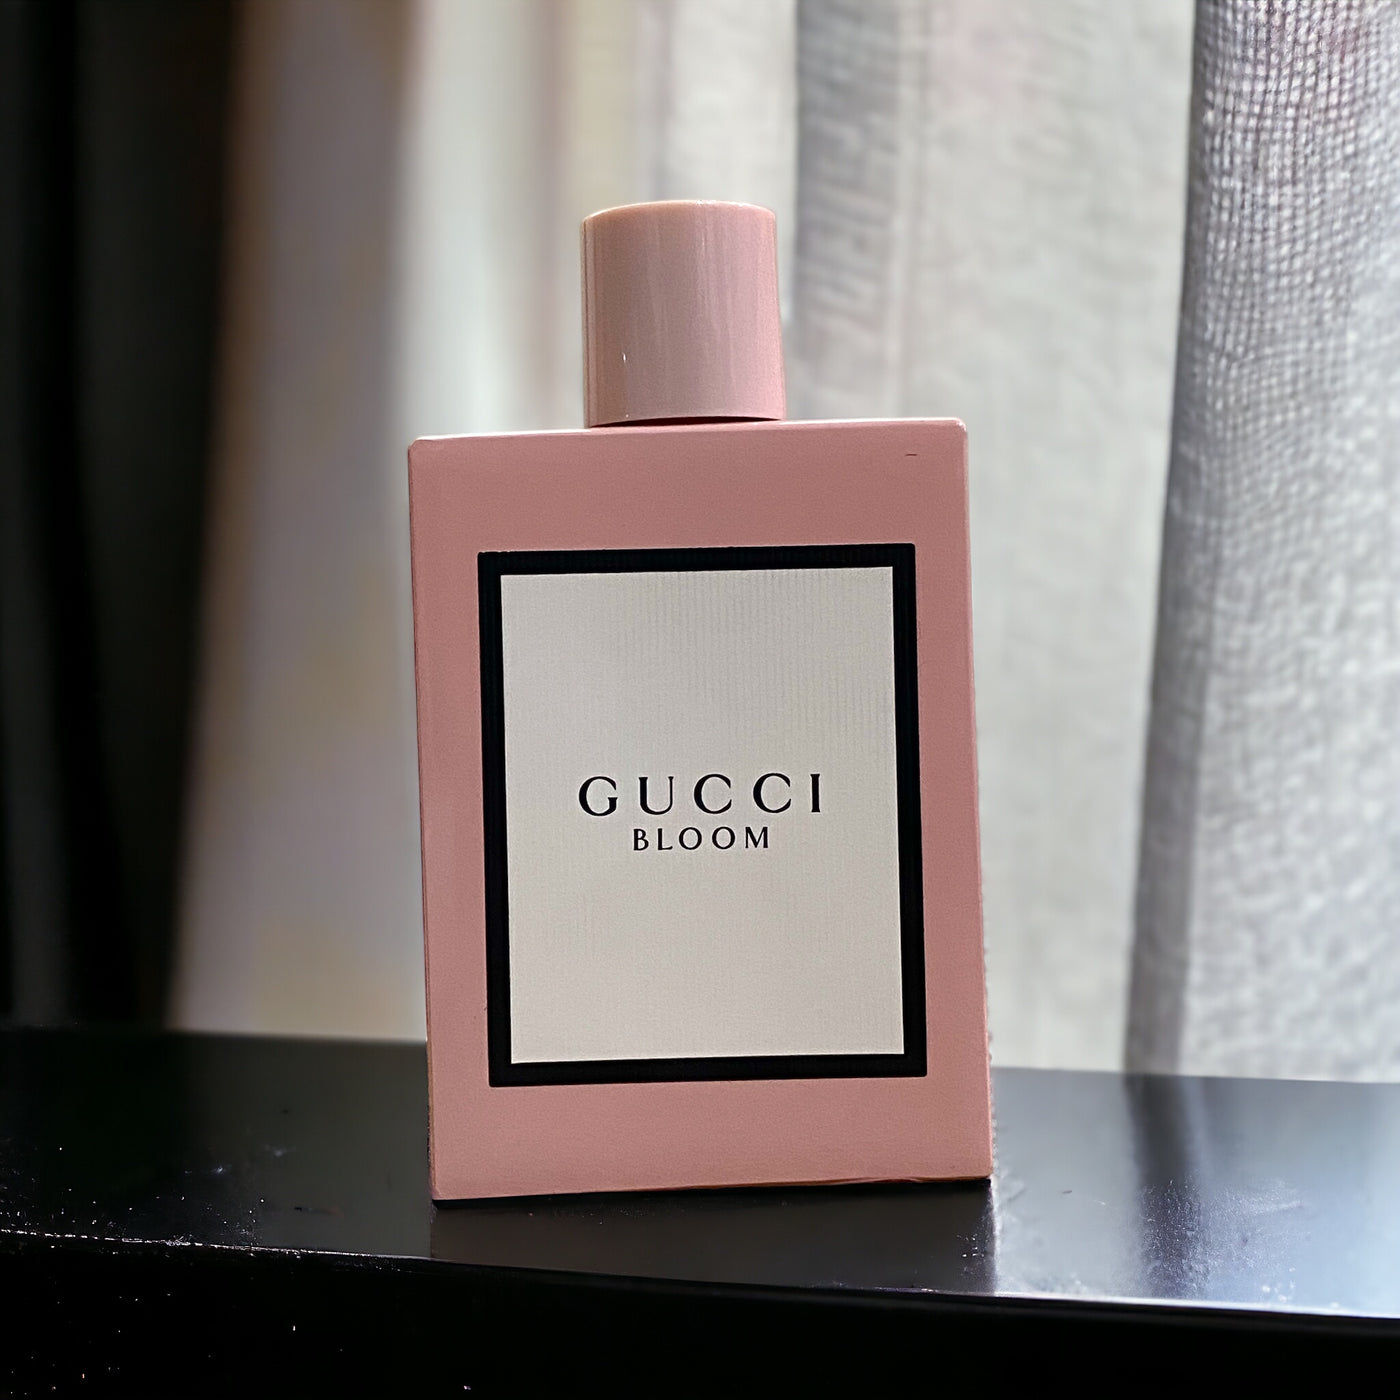 GUCCI BLOOM Tester Perfume